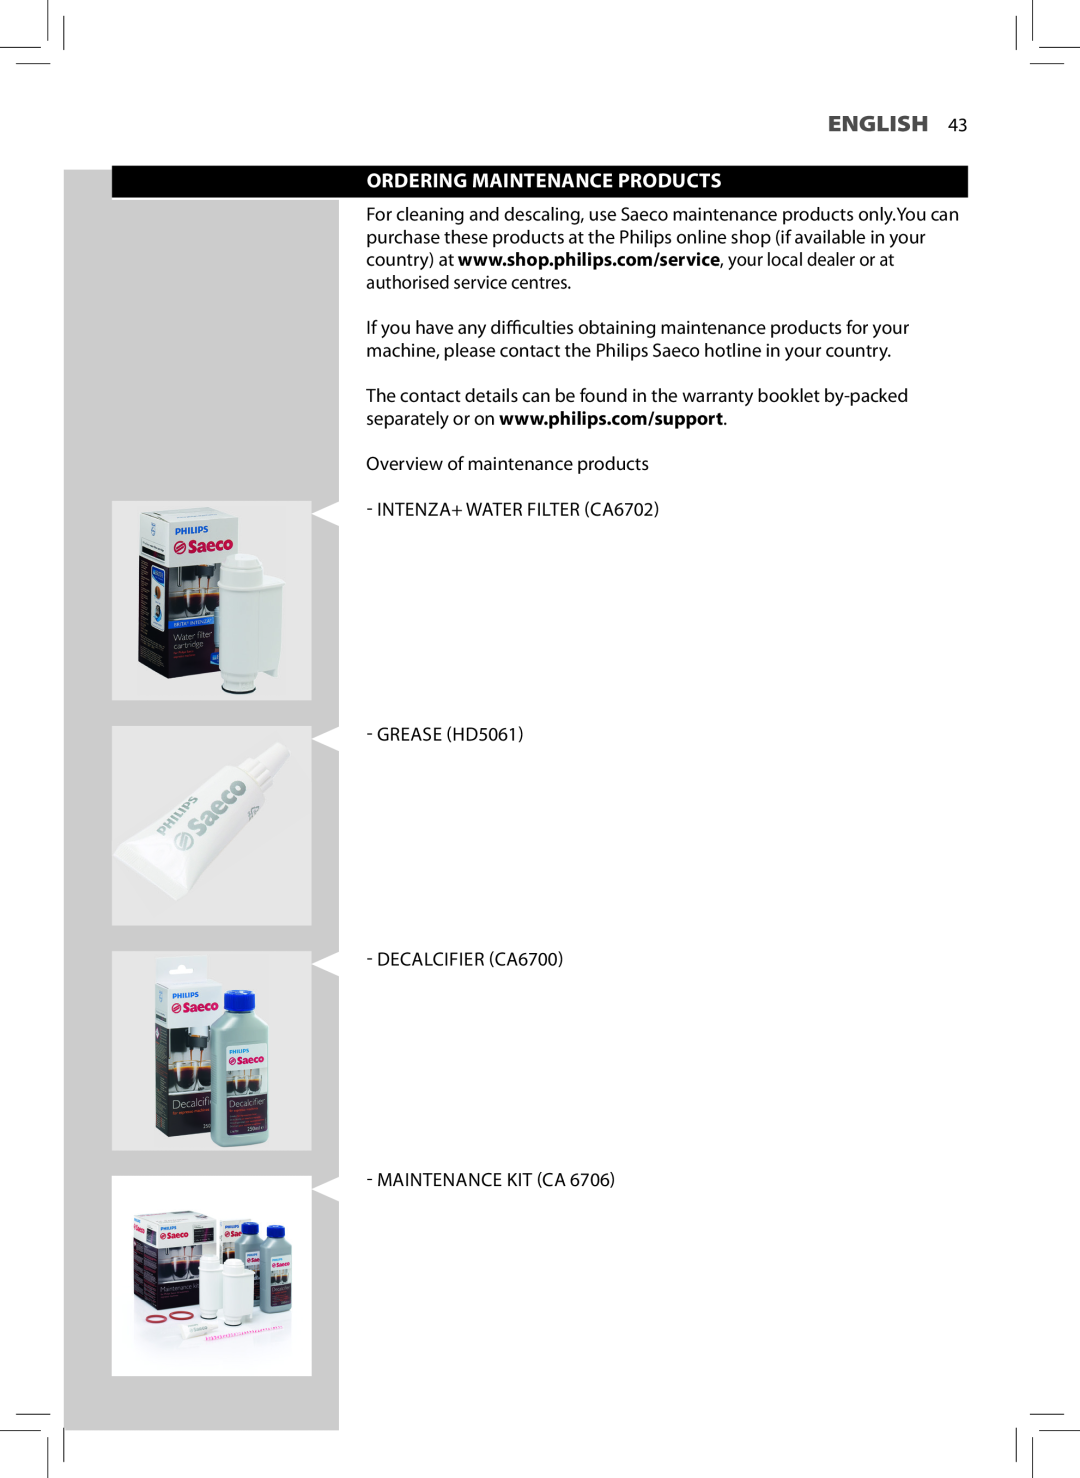 Philips HD8743 English, Ordering Maintenance Products, Overview of maintenance products INTENZA+ WATER FILTER CA6702 